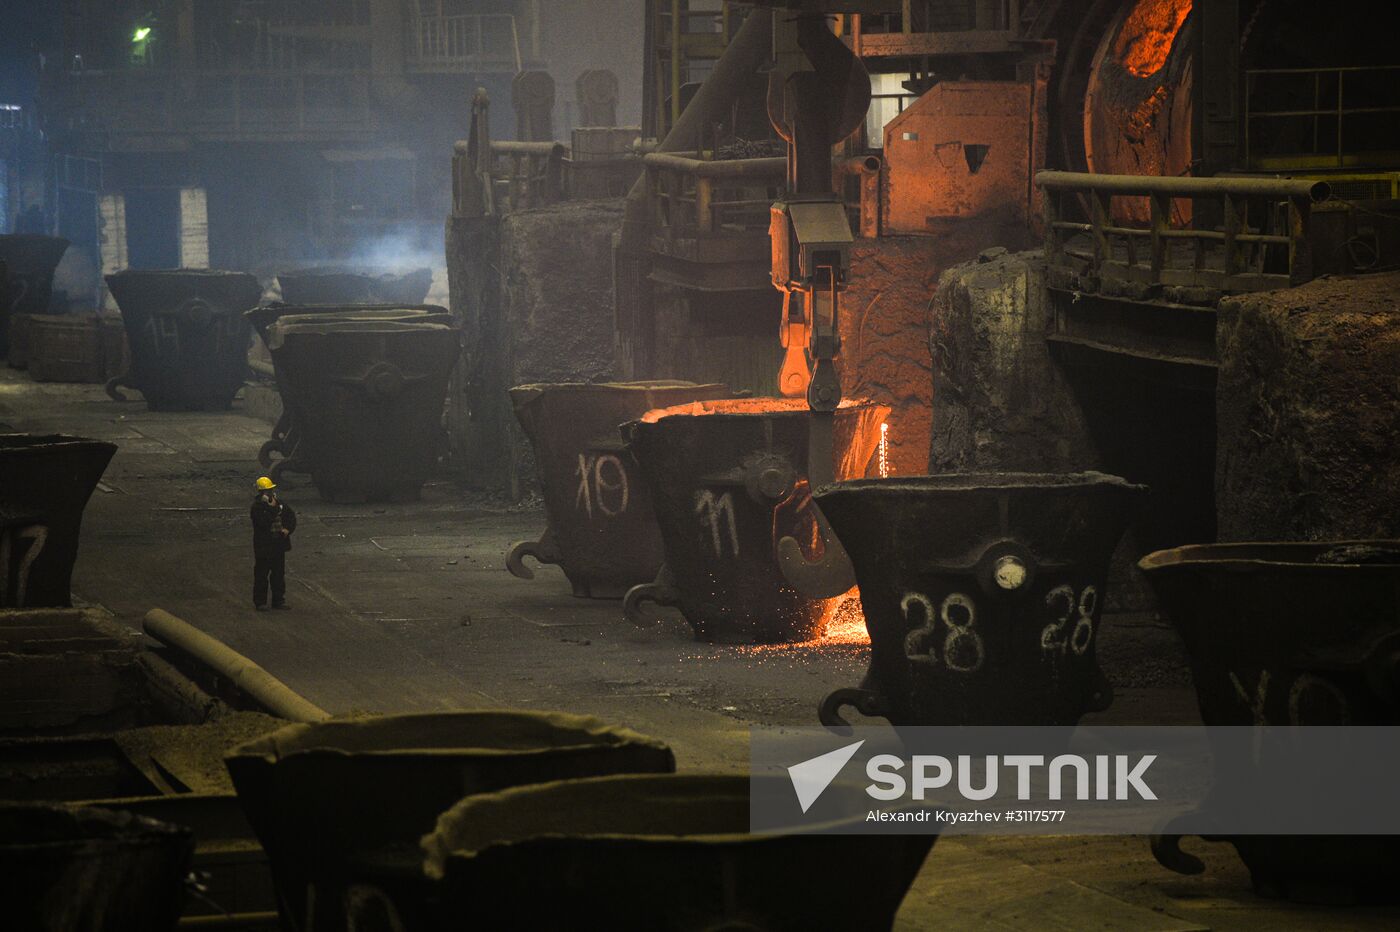 Nadezhdinsk metallurgical plant of Norilsk Nickel Group